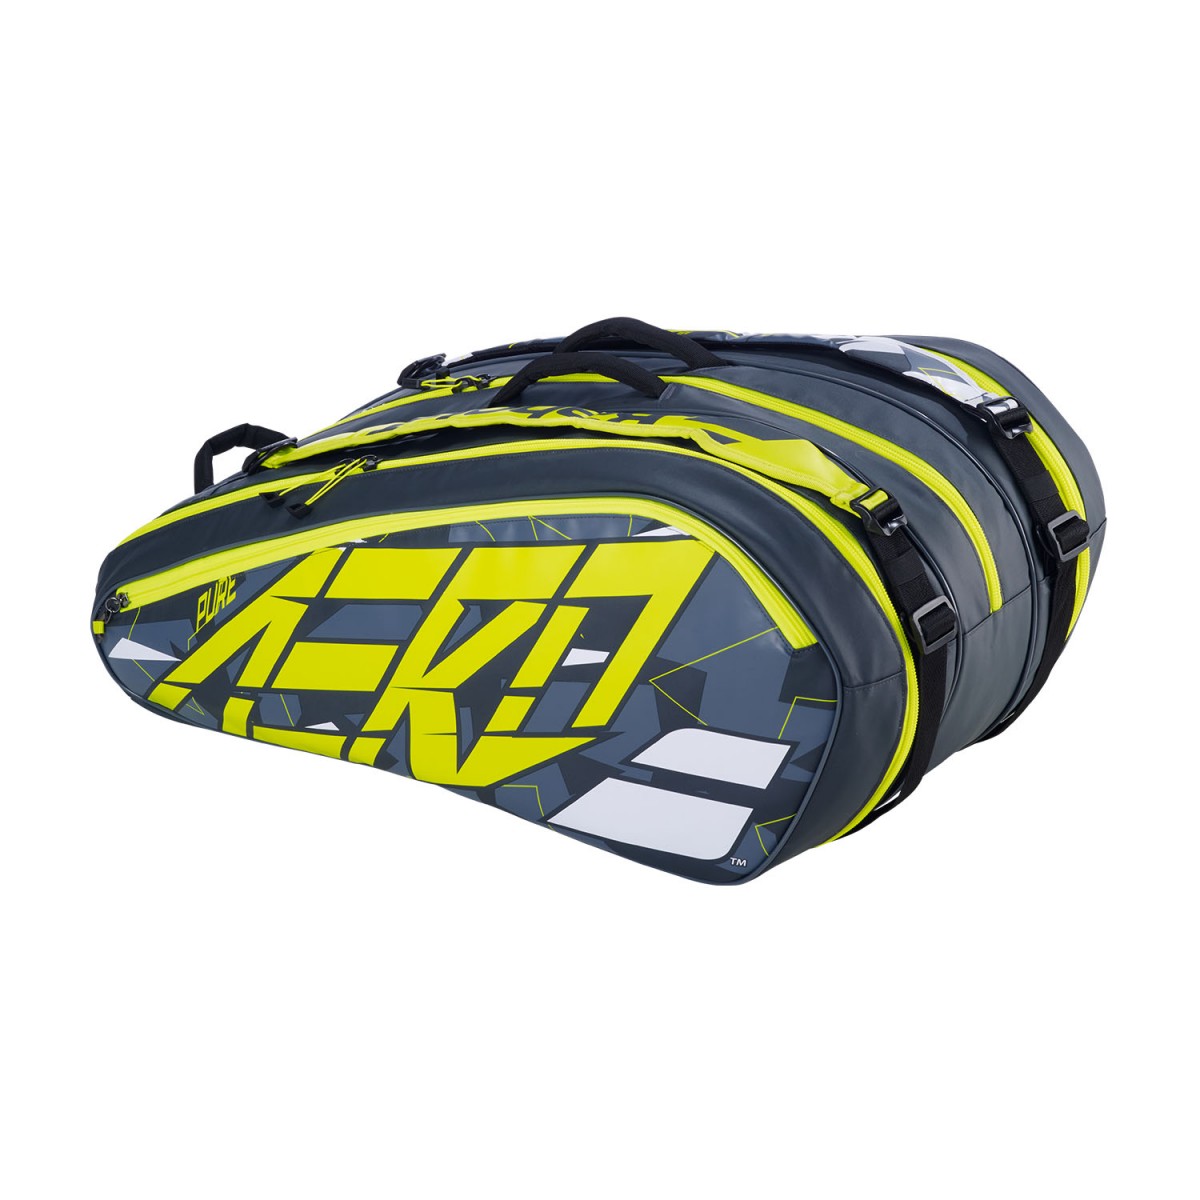 Теннисная сумка Babolat Pure Aero x12 grey/yellow/white